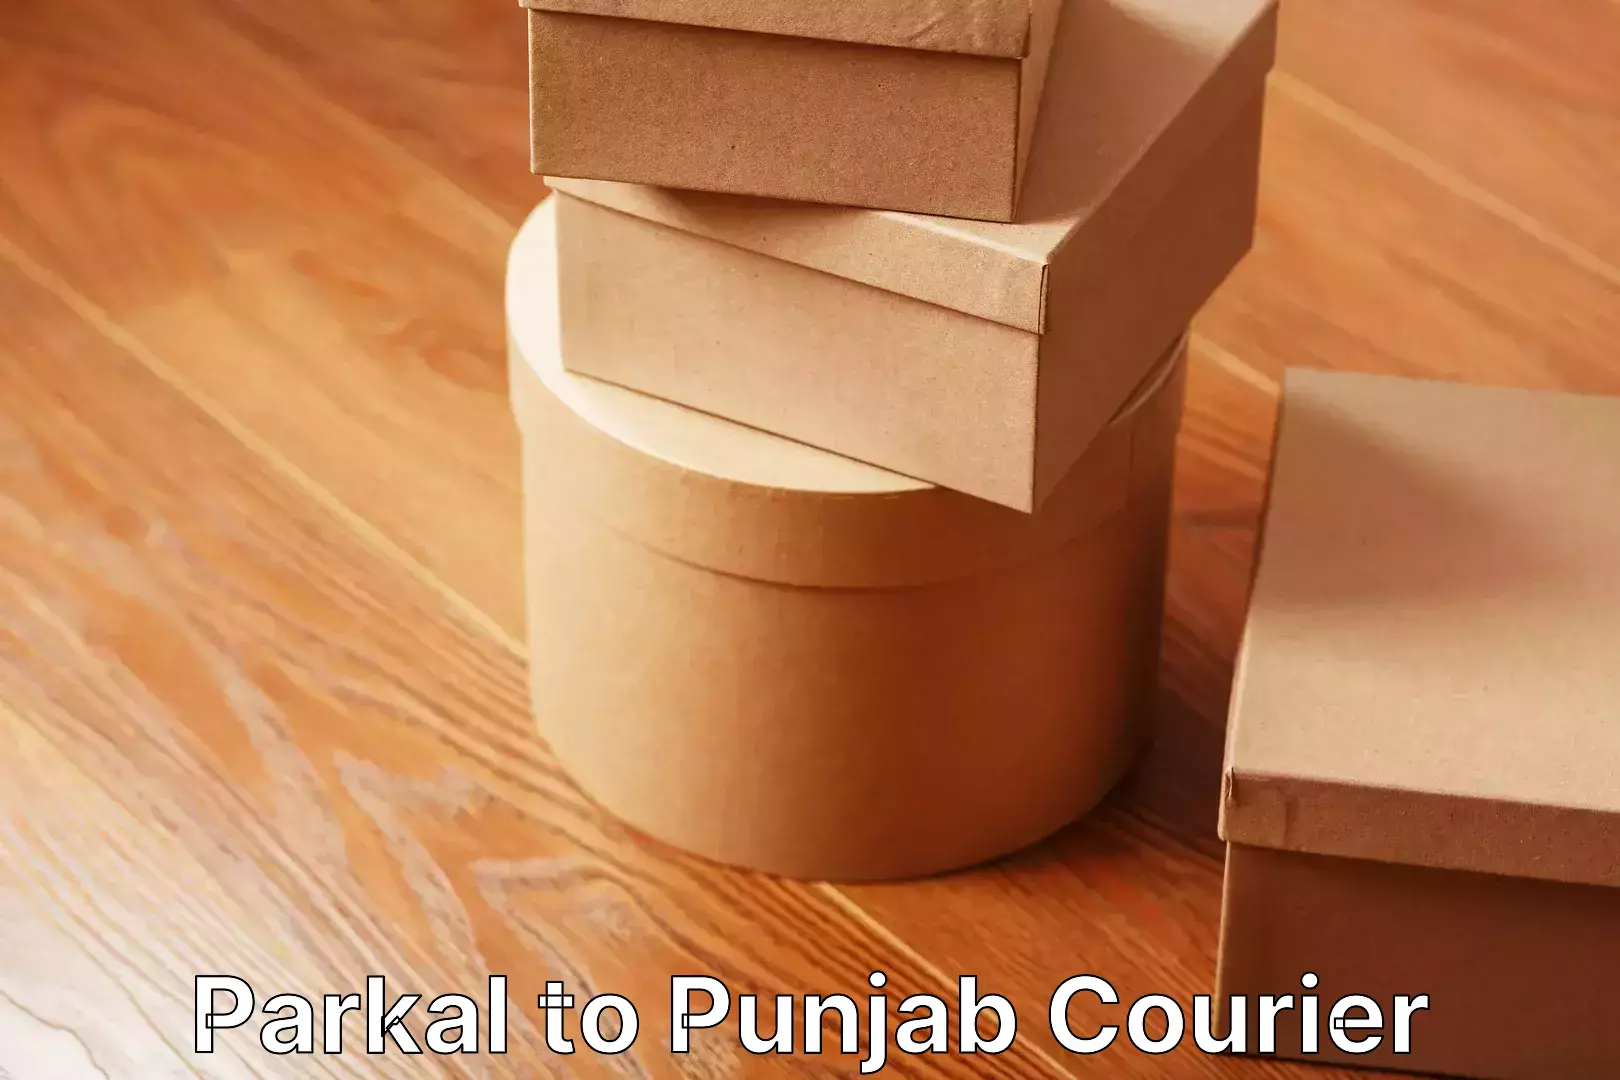 Home shifting experts Parkal to Punjab